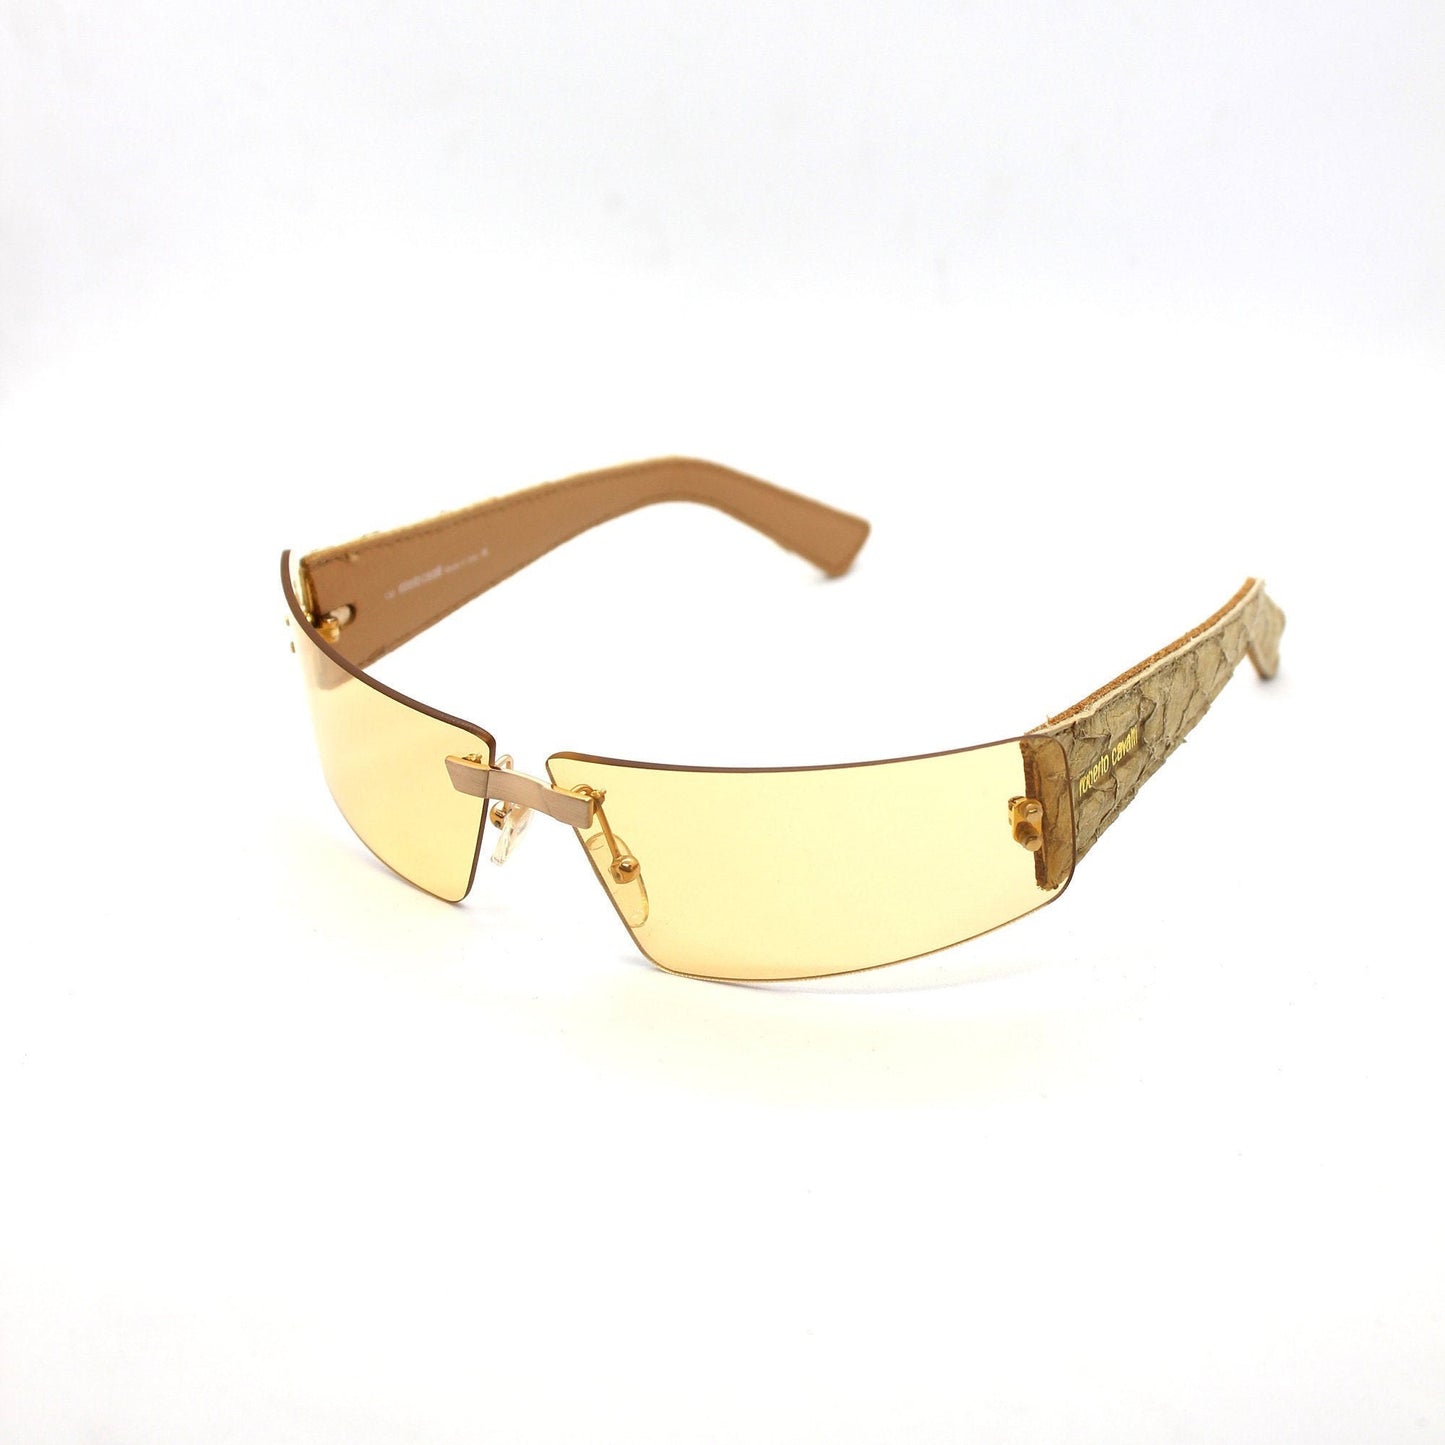 ROBERTO CAVALLI 00s visor Didone Snake skin leather Vintage New Old Stock sunglasses. Never worn